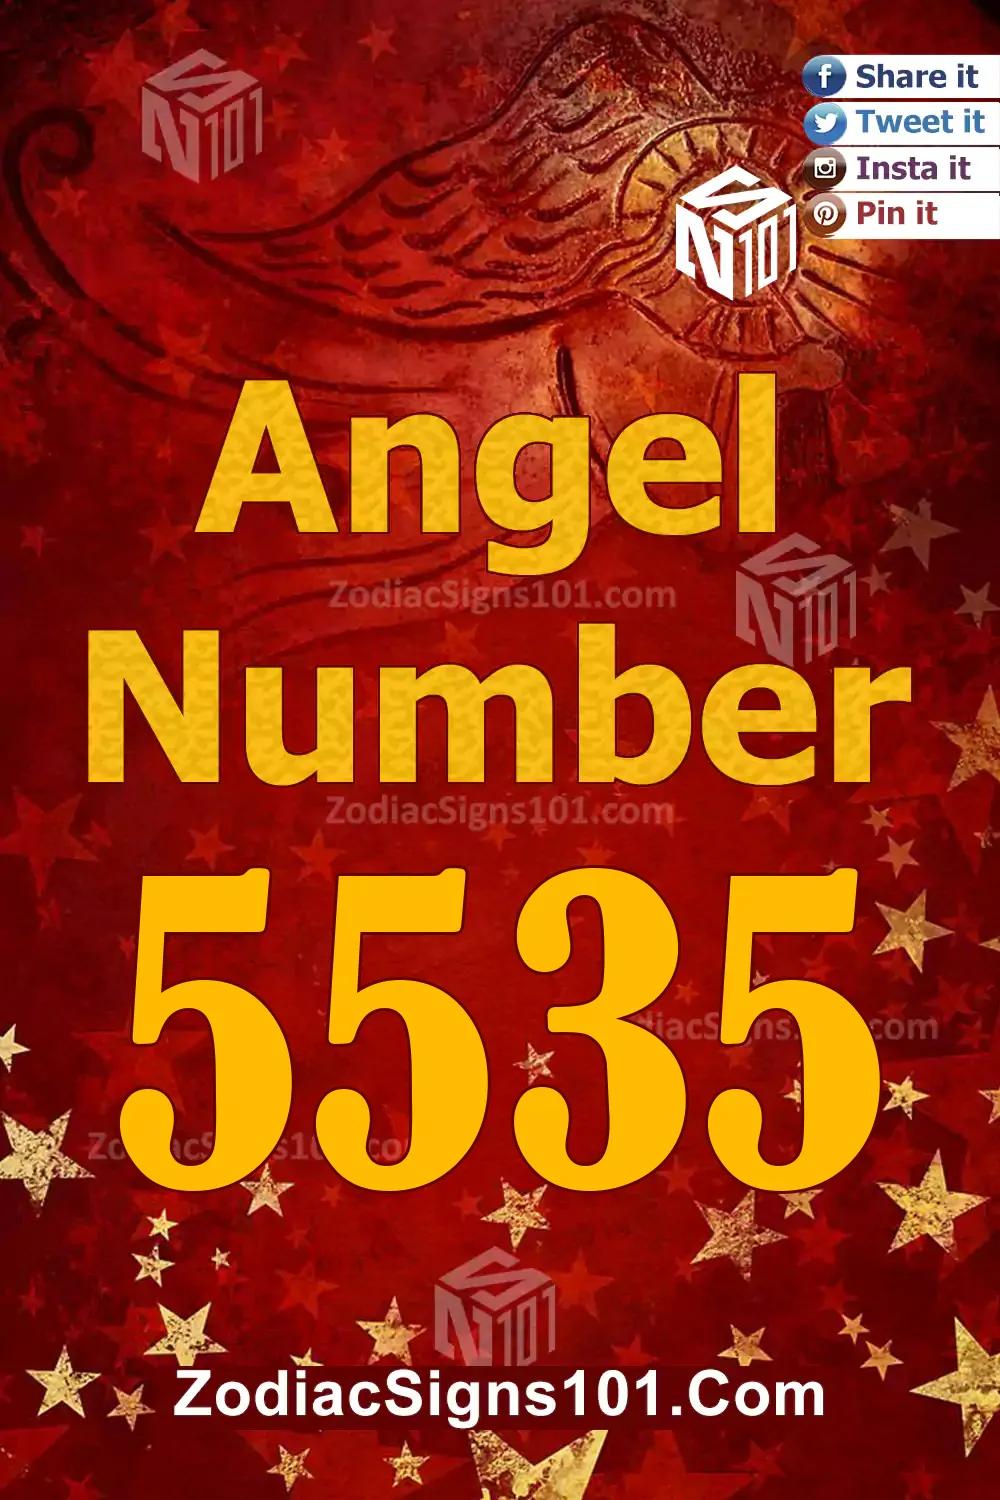 5535-Angel-Number-Meaning.jpg